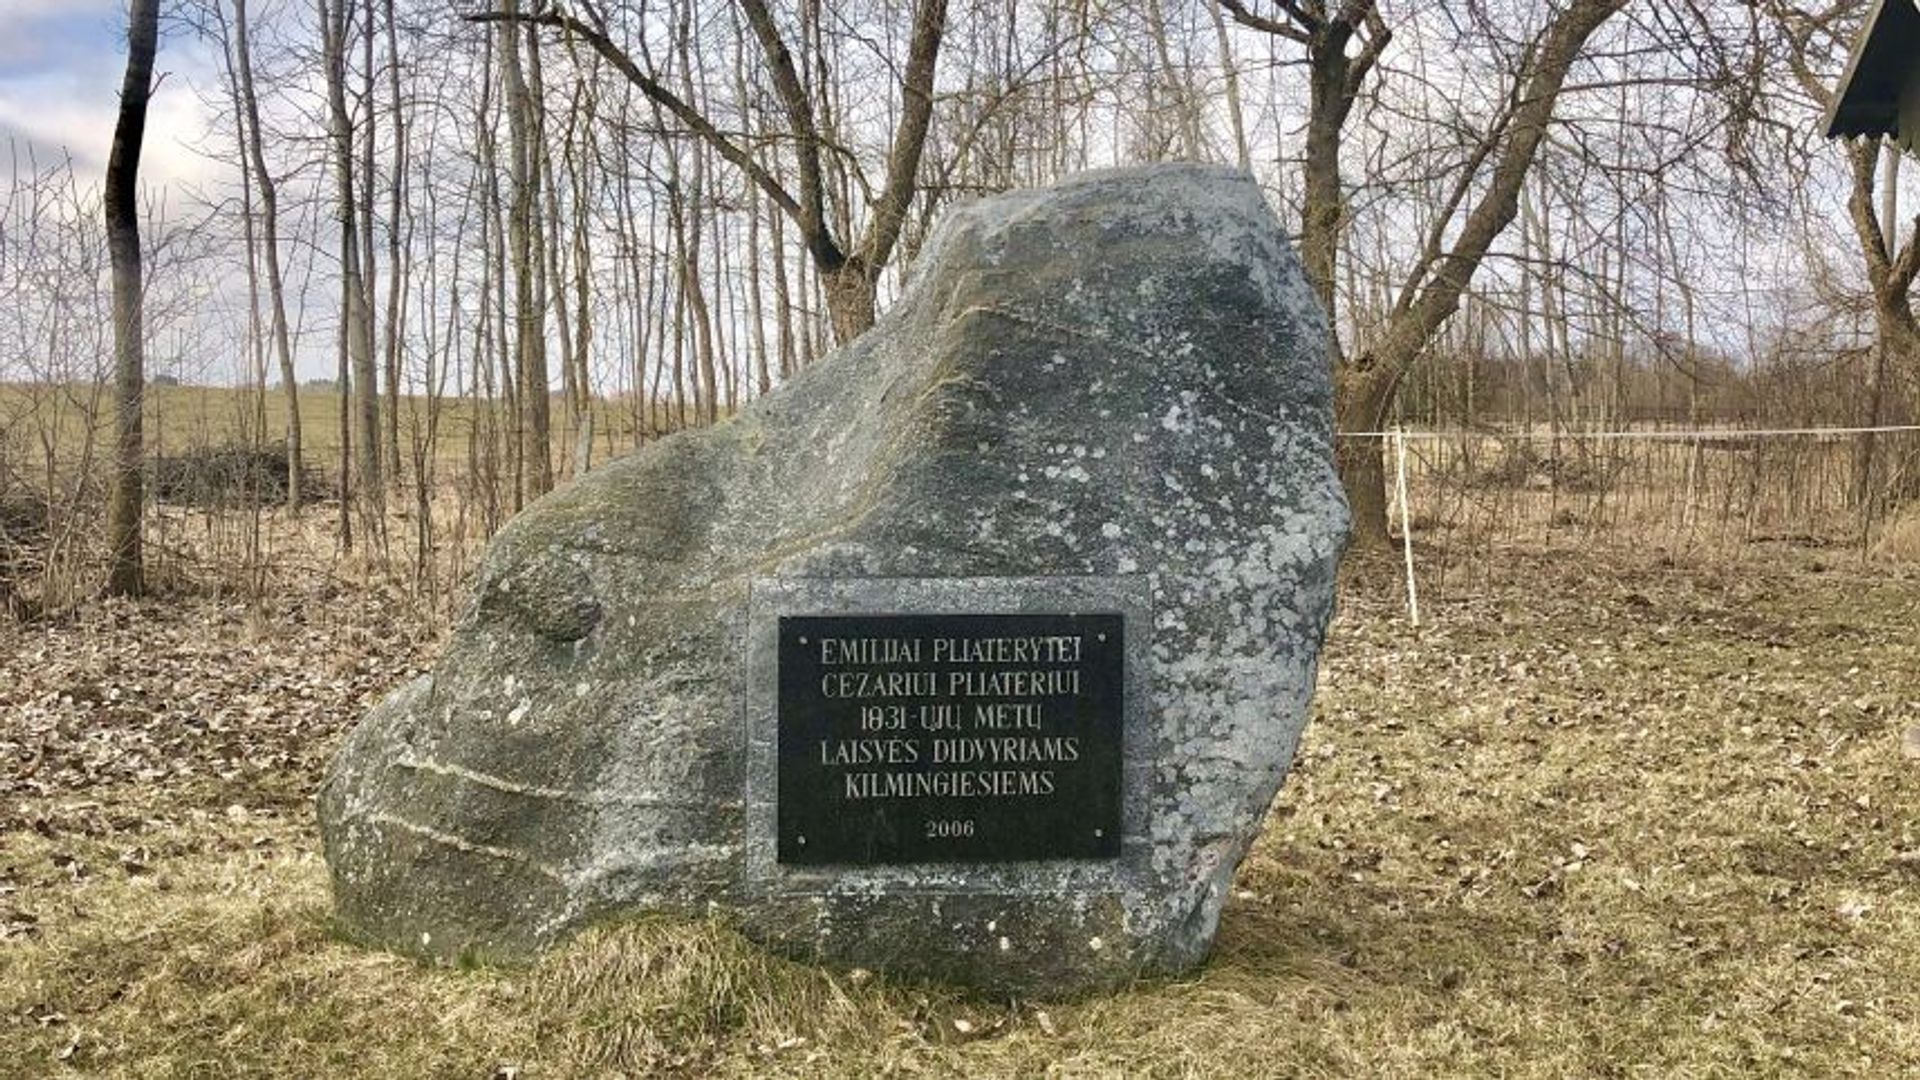 Monument to Emilija Pliaterytė